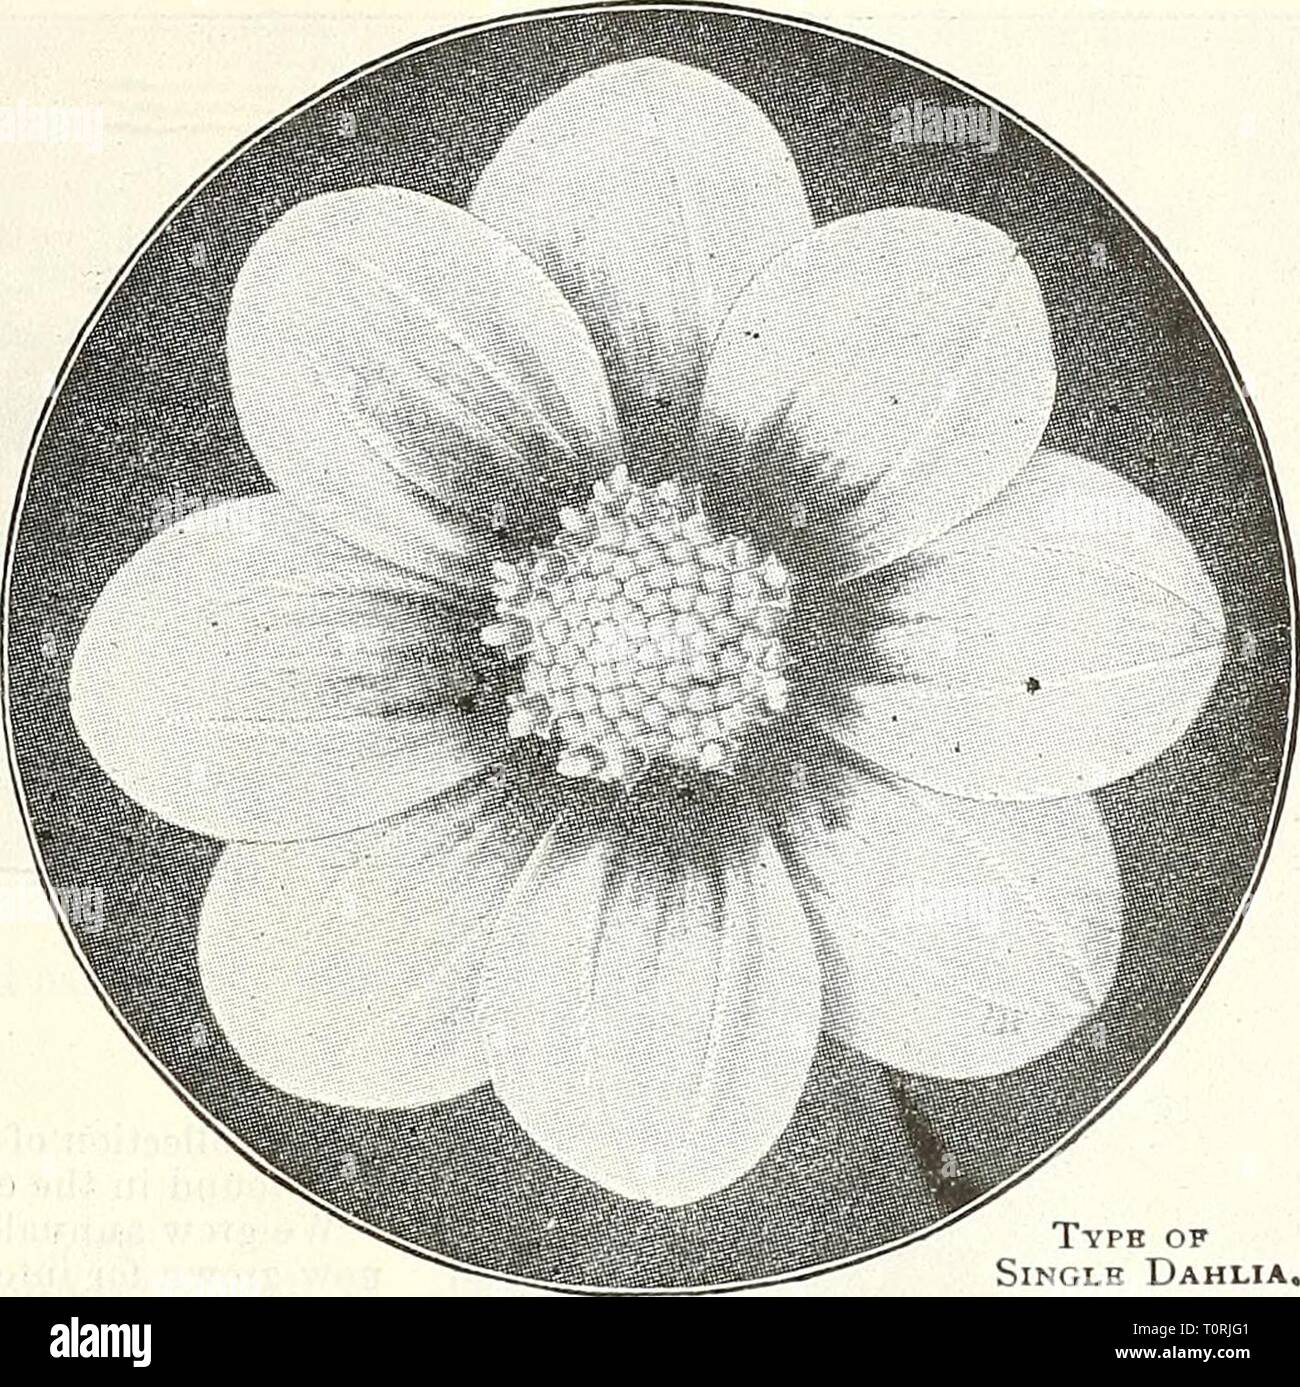 Dreer's garden book  1905 Dreer's garden book : 1905  dreersgardenbook1905henr Year: 1905  •HmRrADffiRvPimACTliPHIAfA-mGARD^H^ORtEHHOUSEPIAhTSjj|J| ws Twelve Choice Single Dahlias. Ami Barrilet. Pure garnet; very ricli ; free-flowering. Anemone. Pure white ; early and Iree. Annie Hughes. Carmine lalce, with yellow disc. Blackbird. Black velvety maroon, wuh a bright red spot at the base of each petal. Fashion. Crimson-maroon, darker shadings. Geo. Boreman. Deep glowing carmine, with a broad band of orange-scarlet through each petal. Juno. White, tippe 1 bright rose ; yellow disc. Lawrence Krame Stock Photo